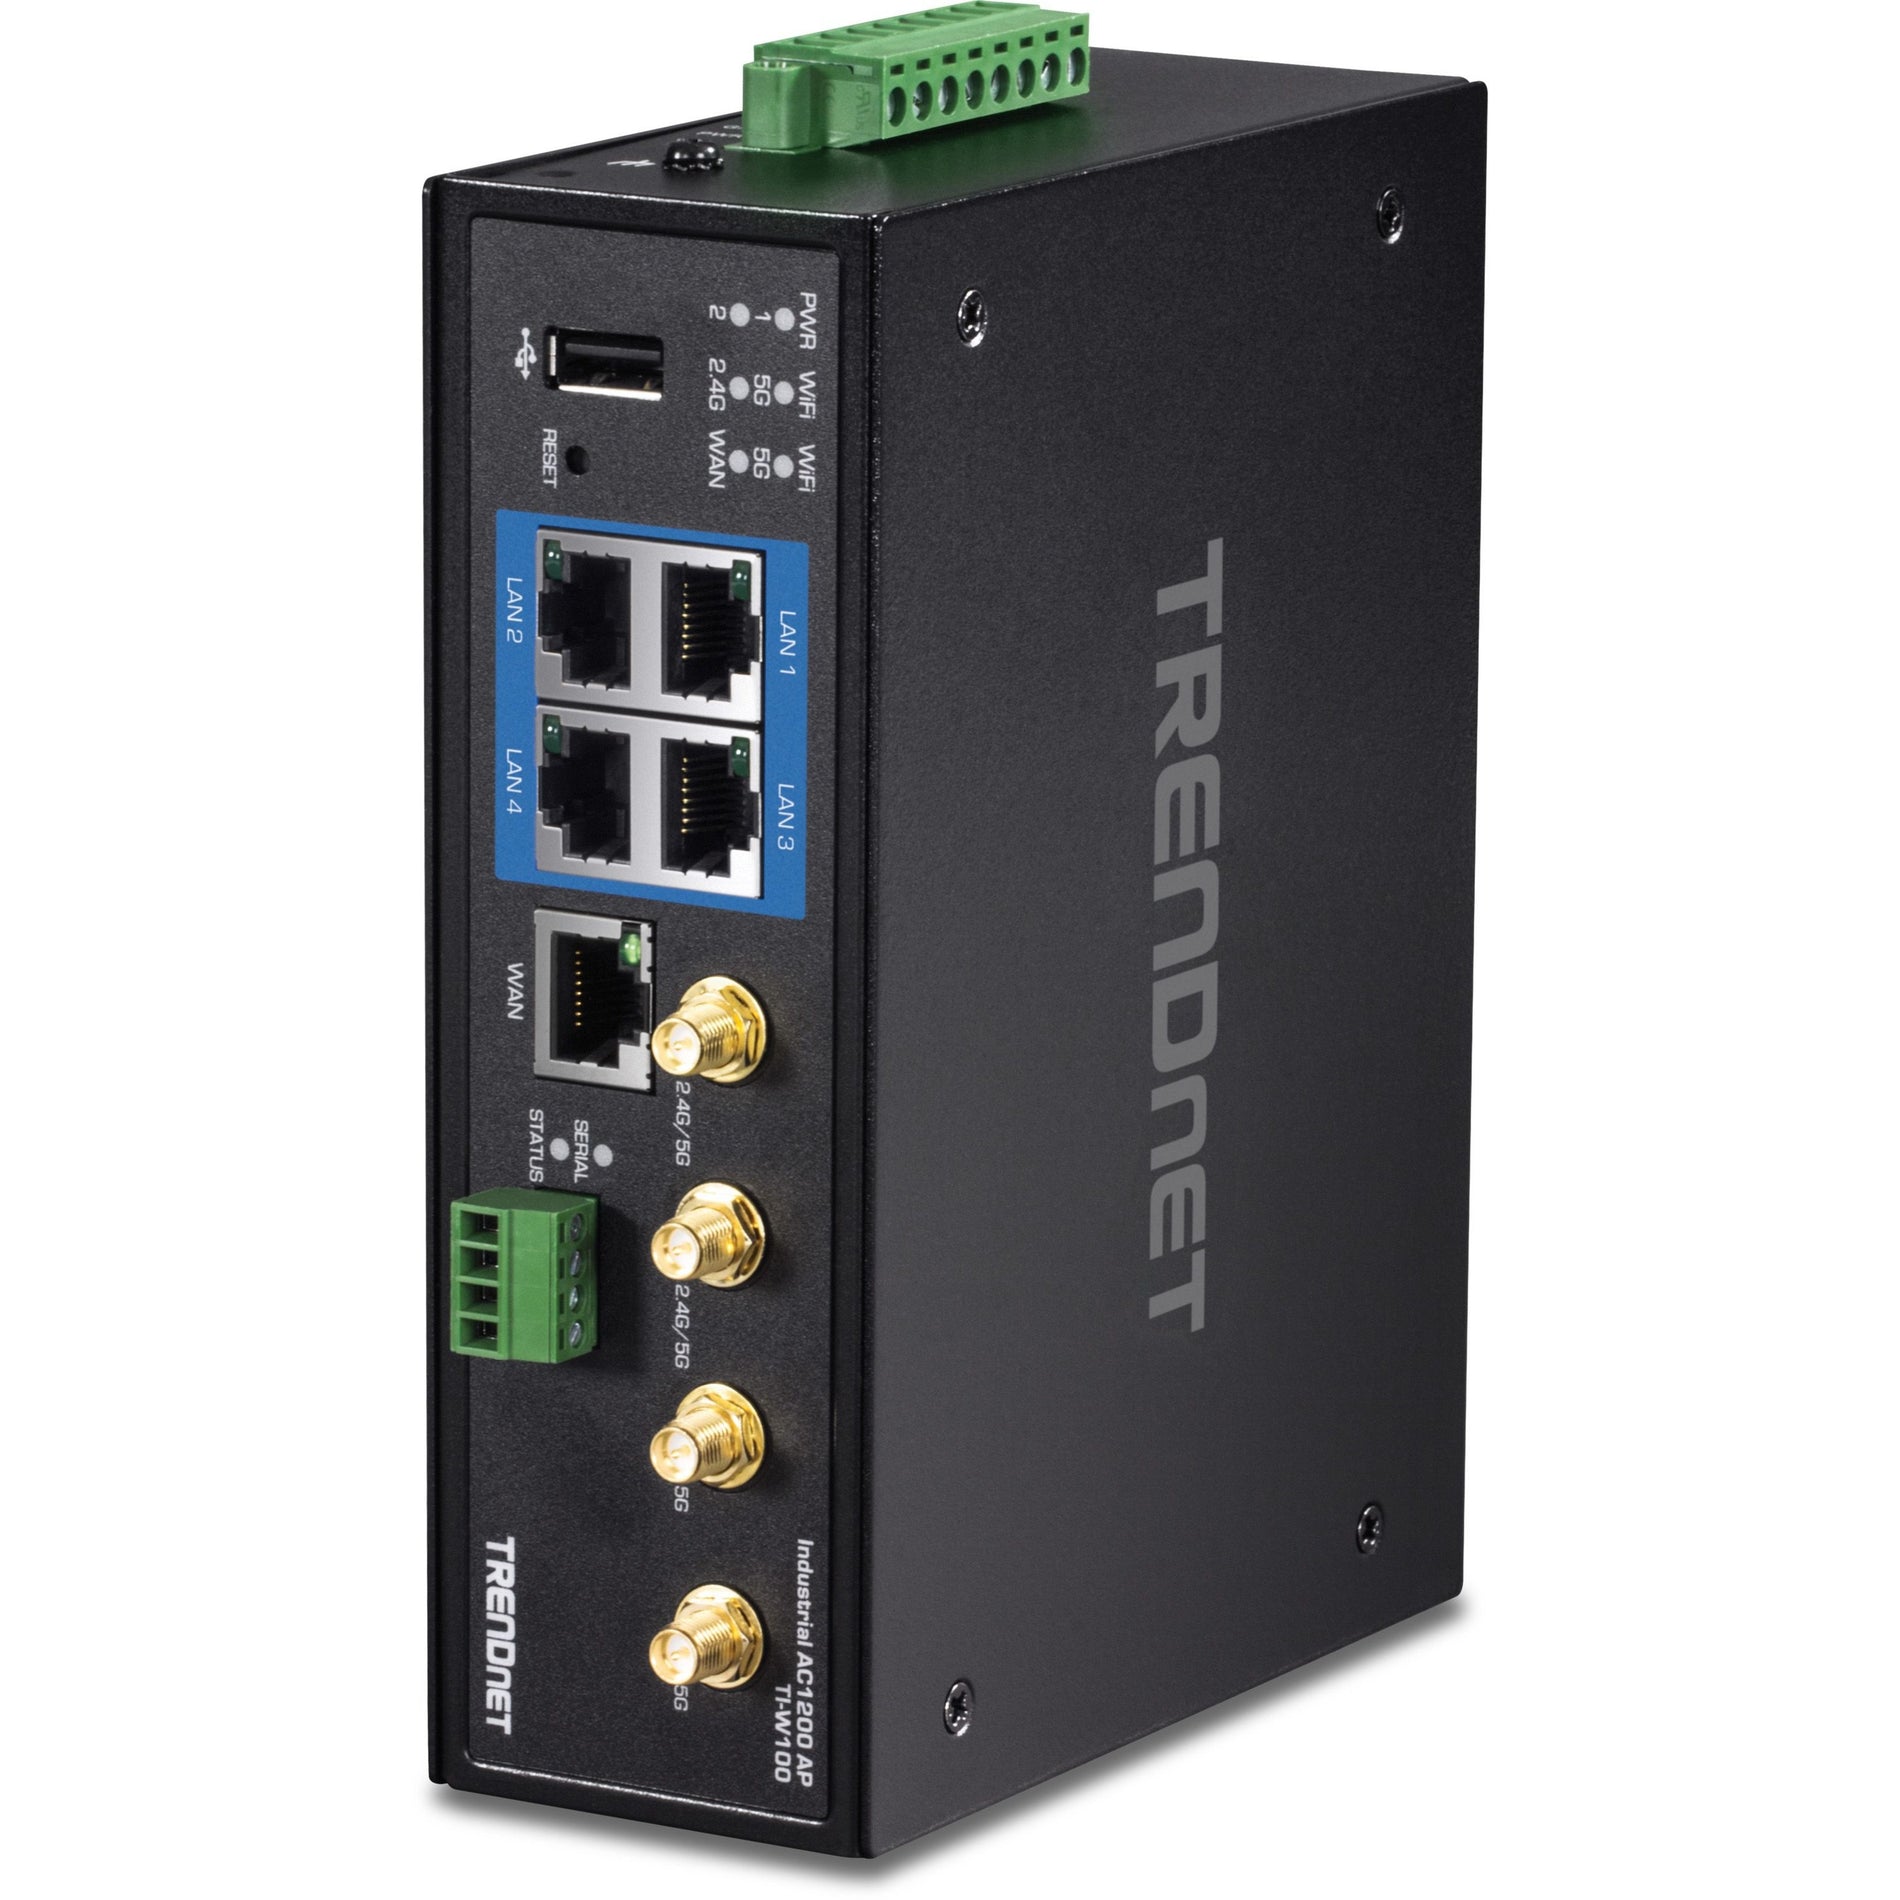 TRENDnet Industrial AC1200 Wireless Dual Band Gigabit Router, Black, TI-W100